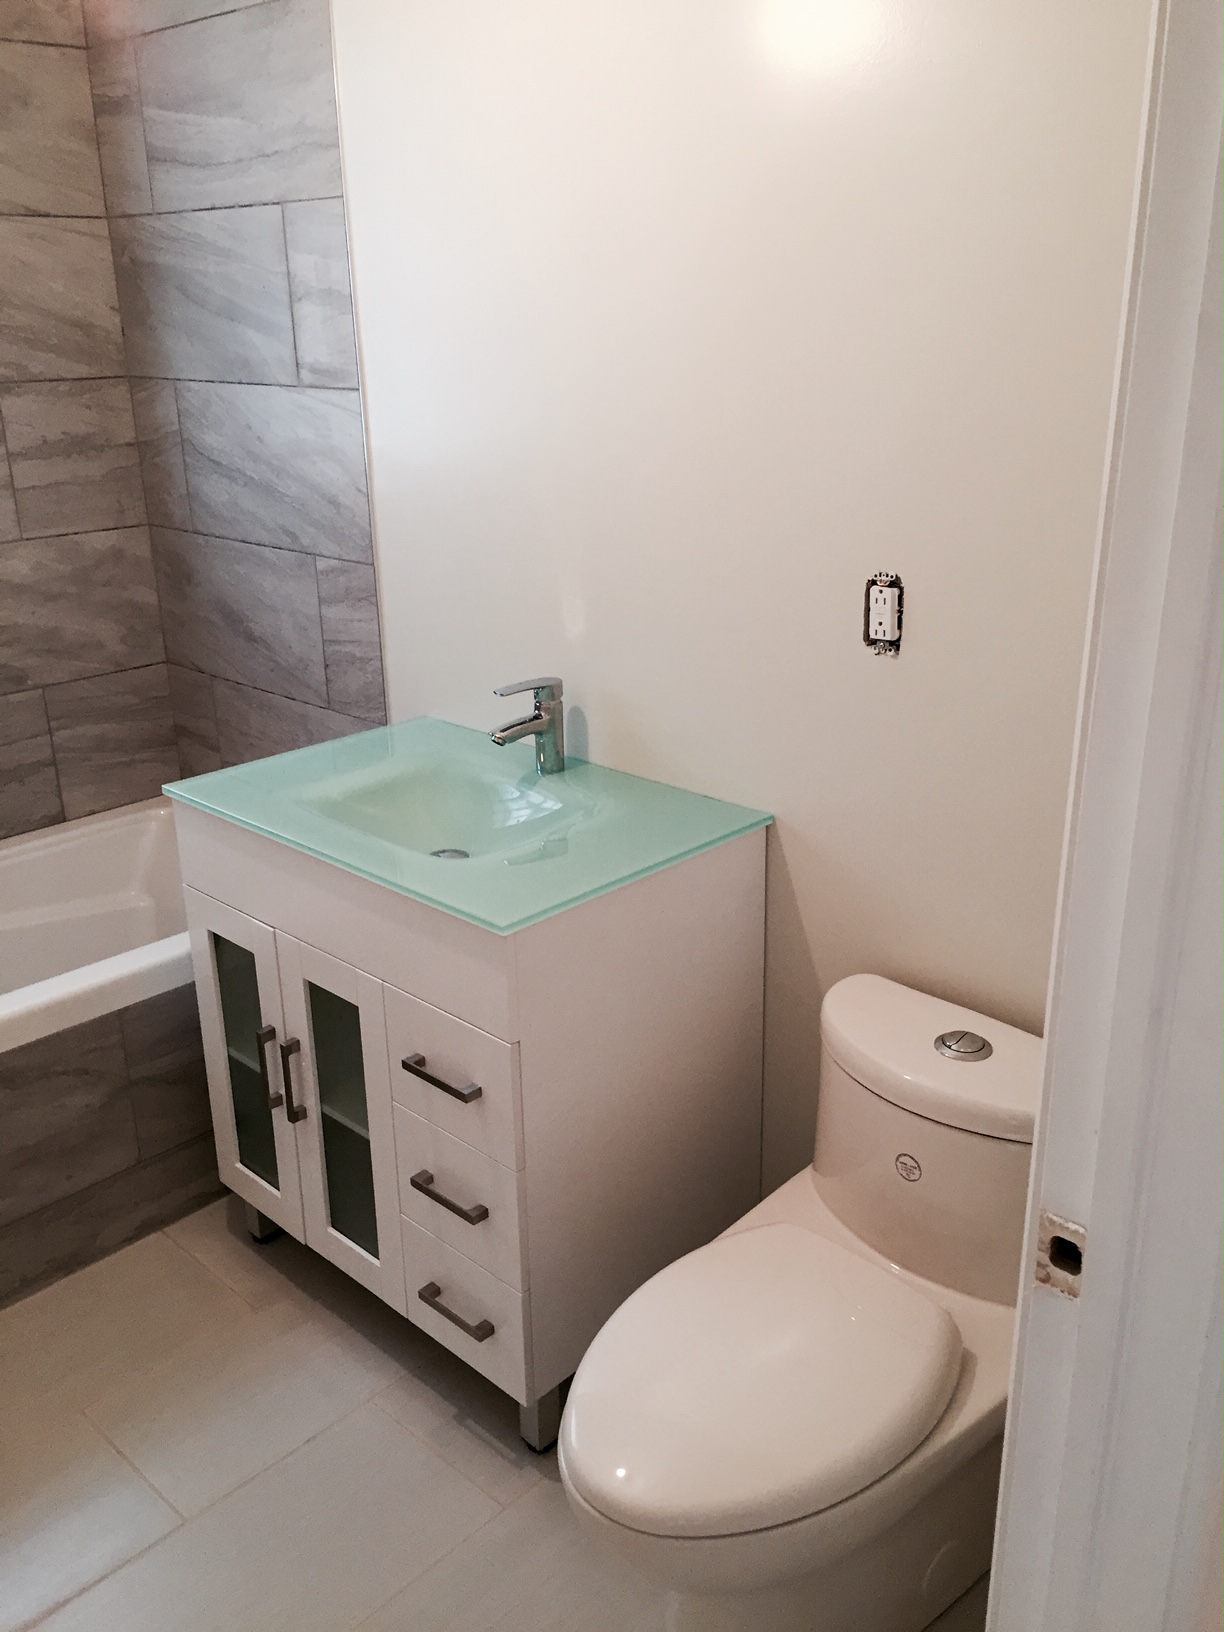 bathroom-toilet-faucet-plumber